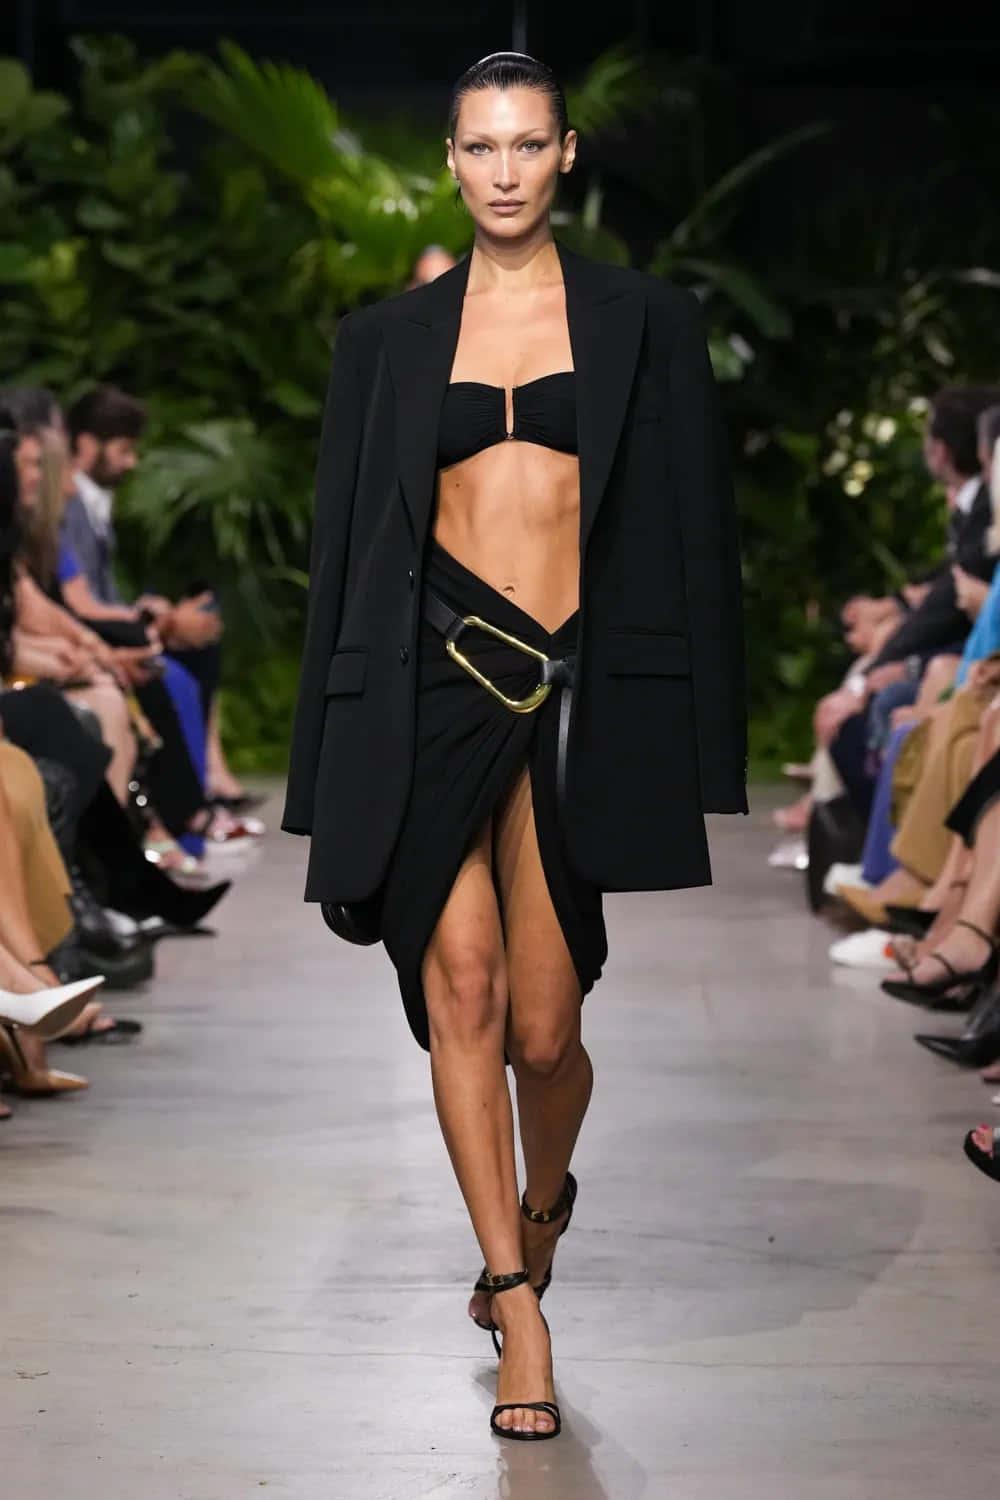 A Model Walks Down The Runway Wearing A Black Blazer And Skirt